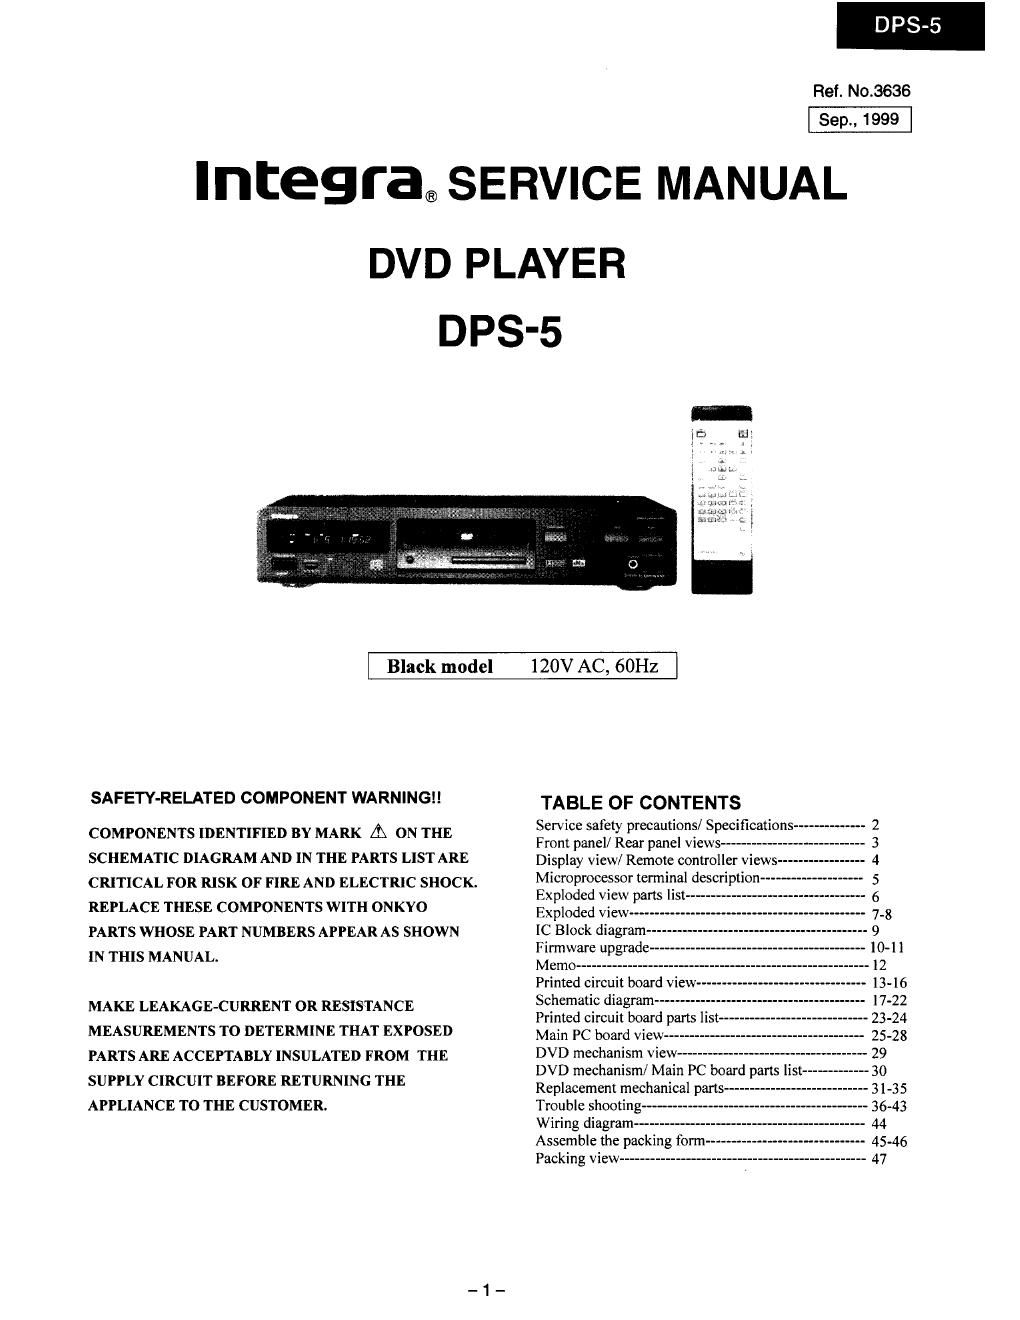 integra dps 5 service manual